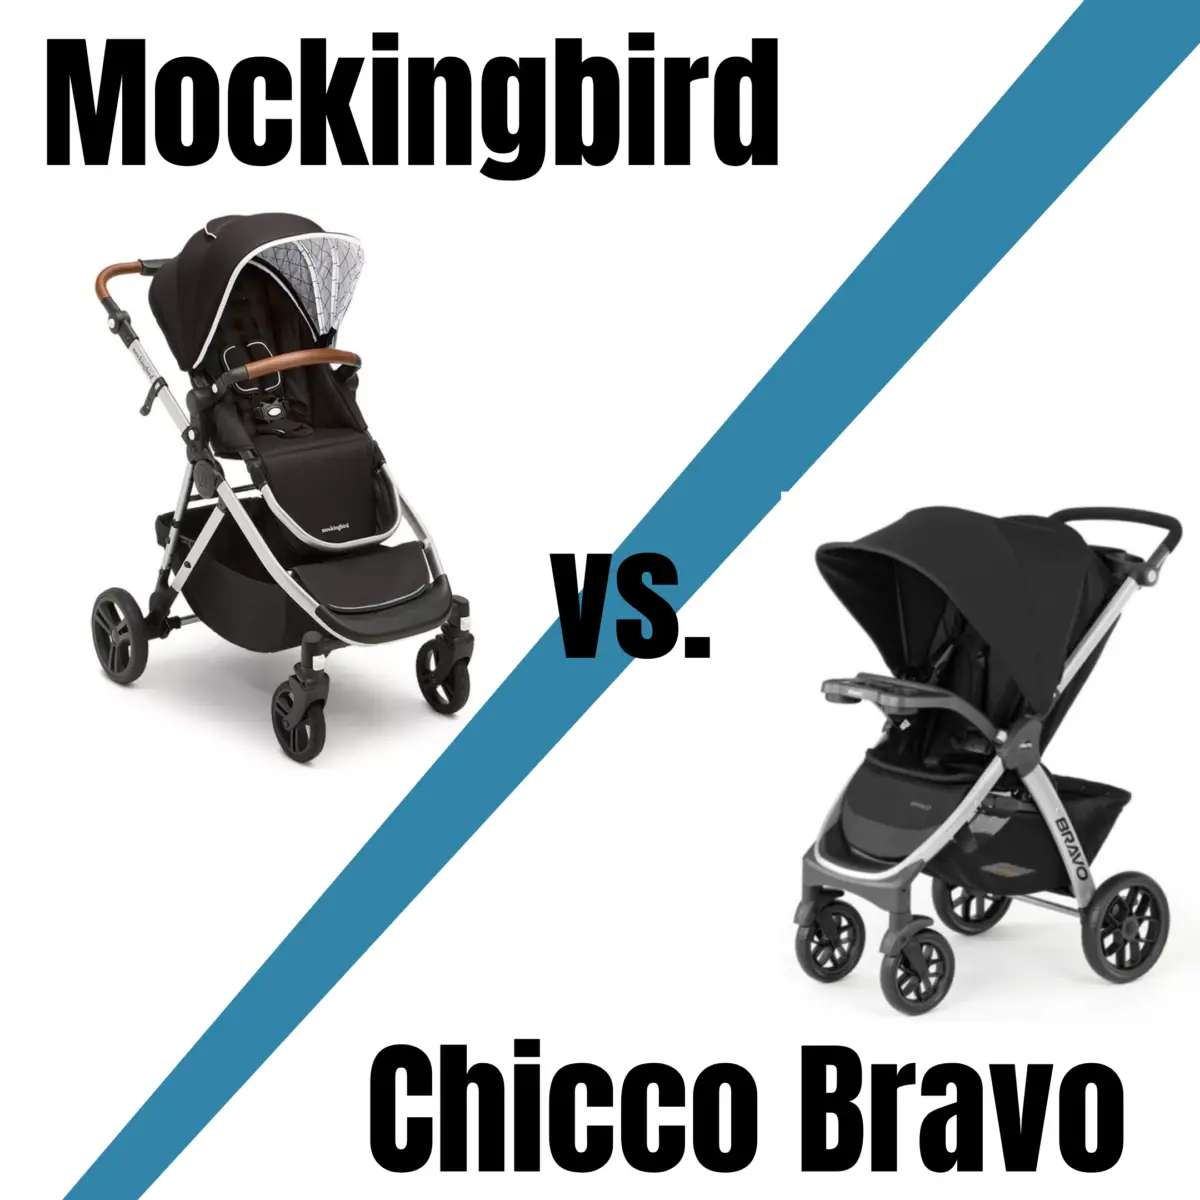 Chicco Bravo vs. Mockingbird Stroller Comparison